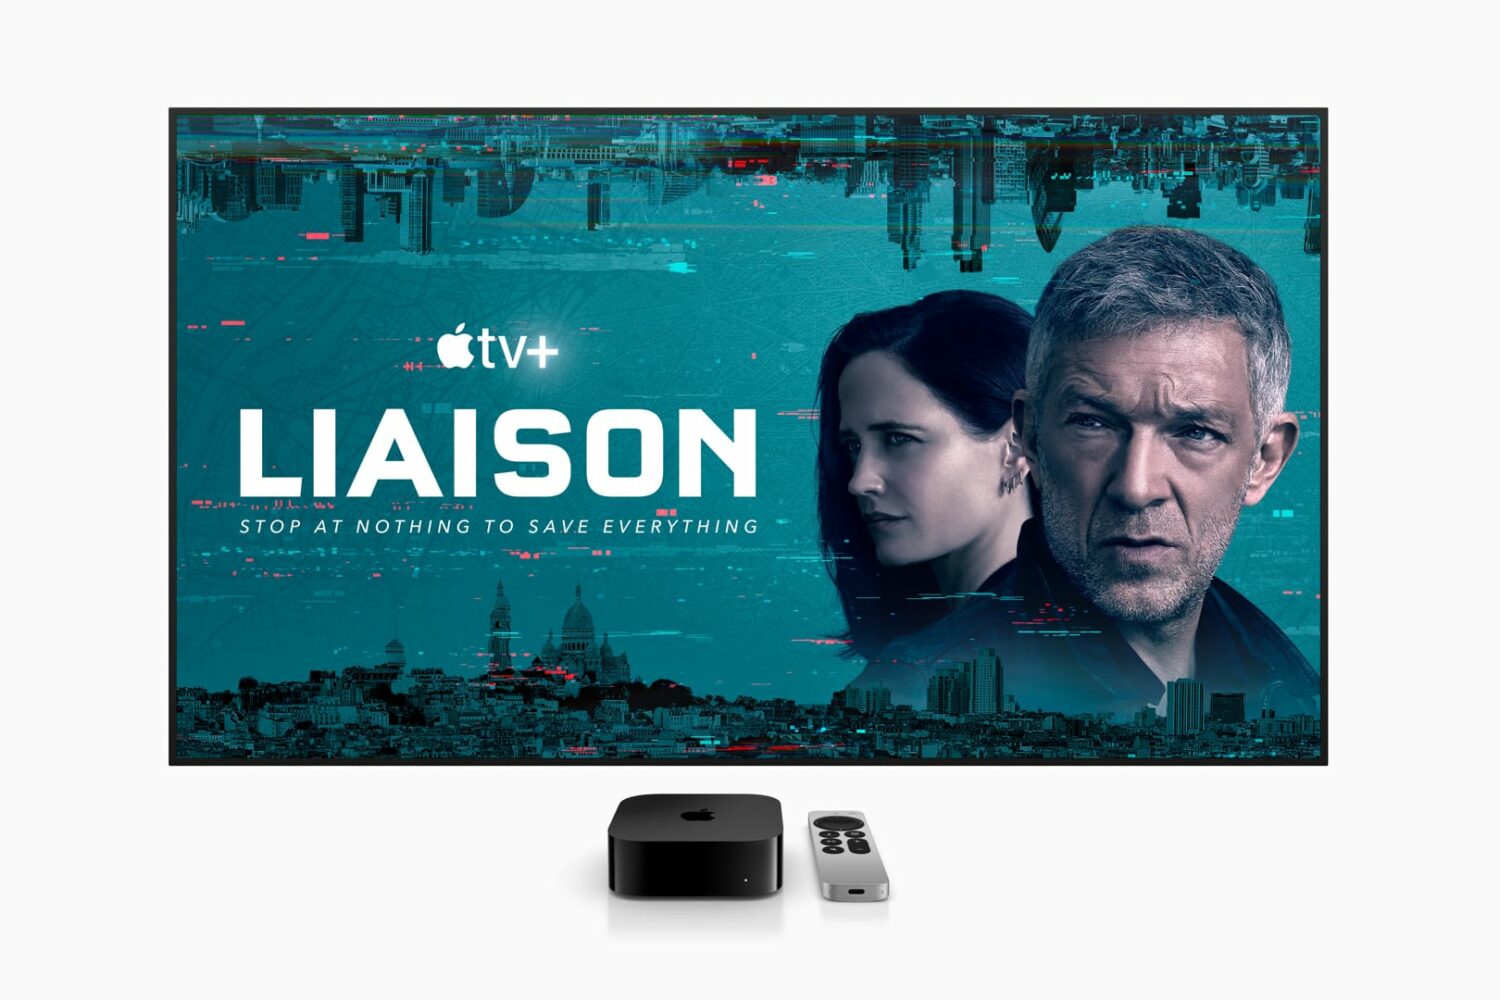 Apple TV, Siri Remote and the "Liason" Apple TV+ film displayed on a TV set